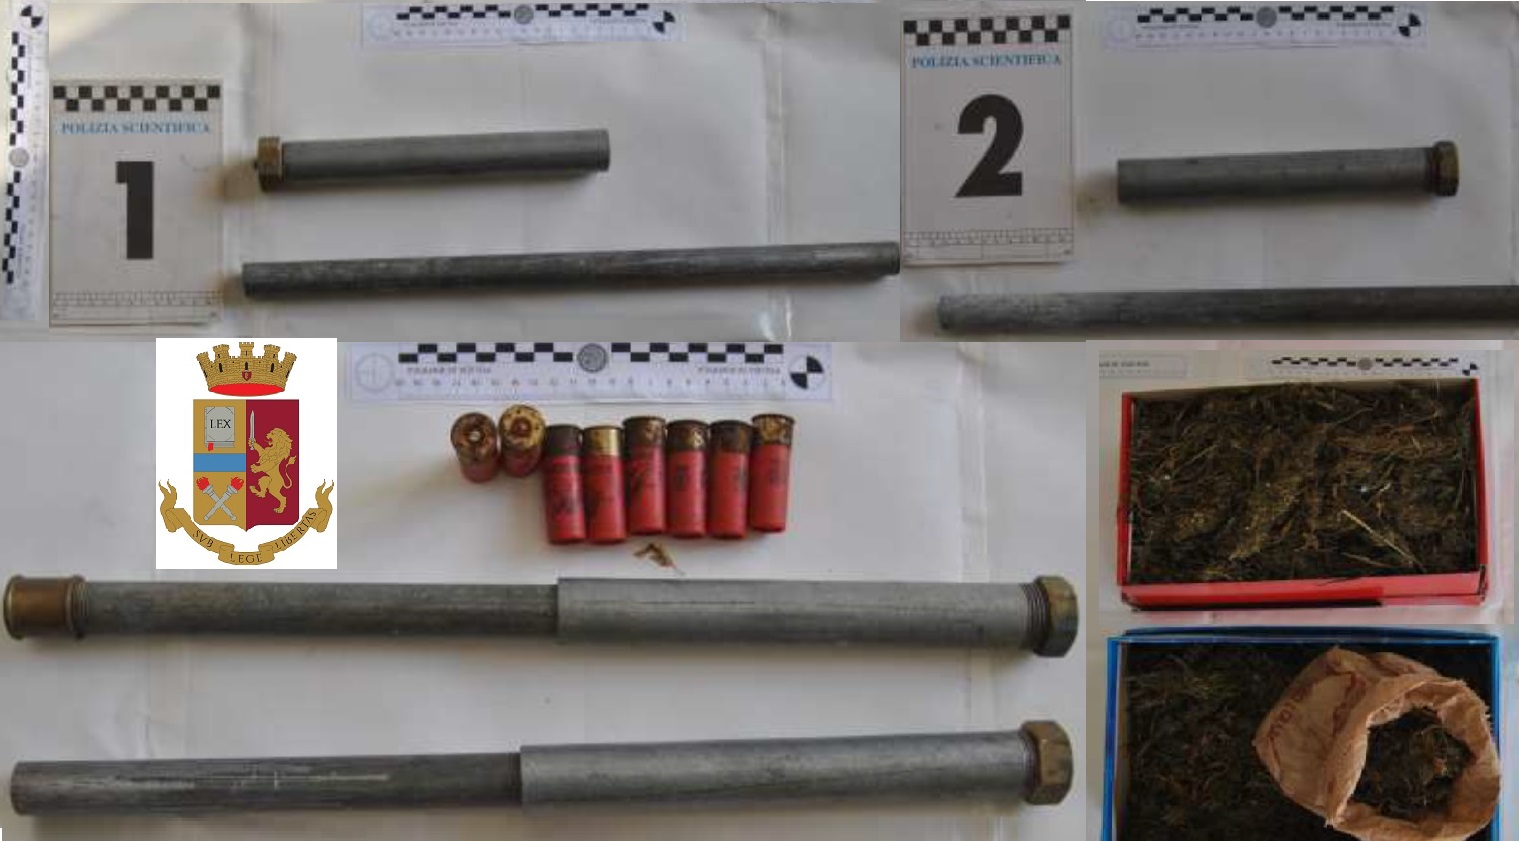 armi clandestine, munizioni e marijuana sequestrati